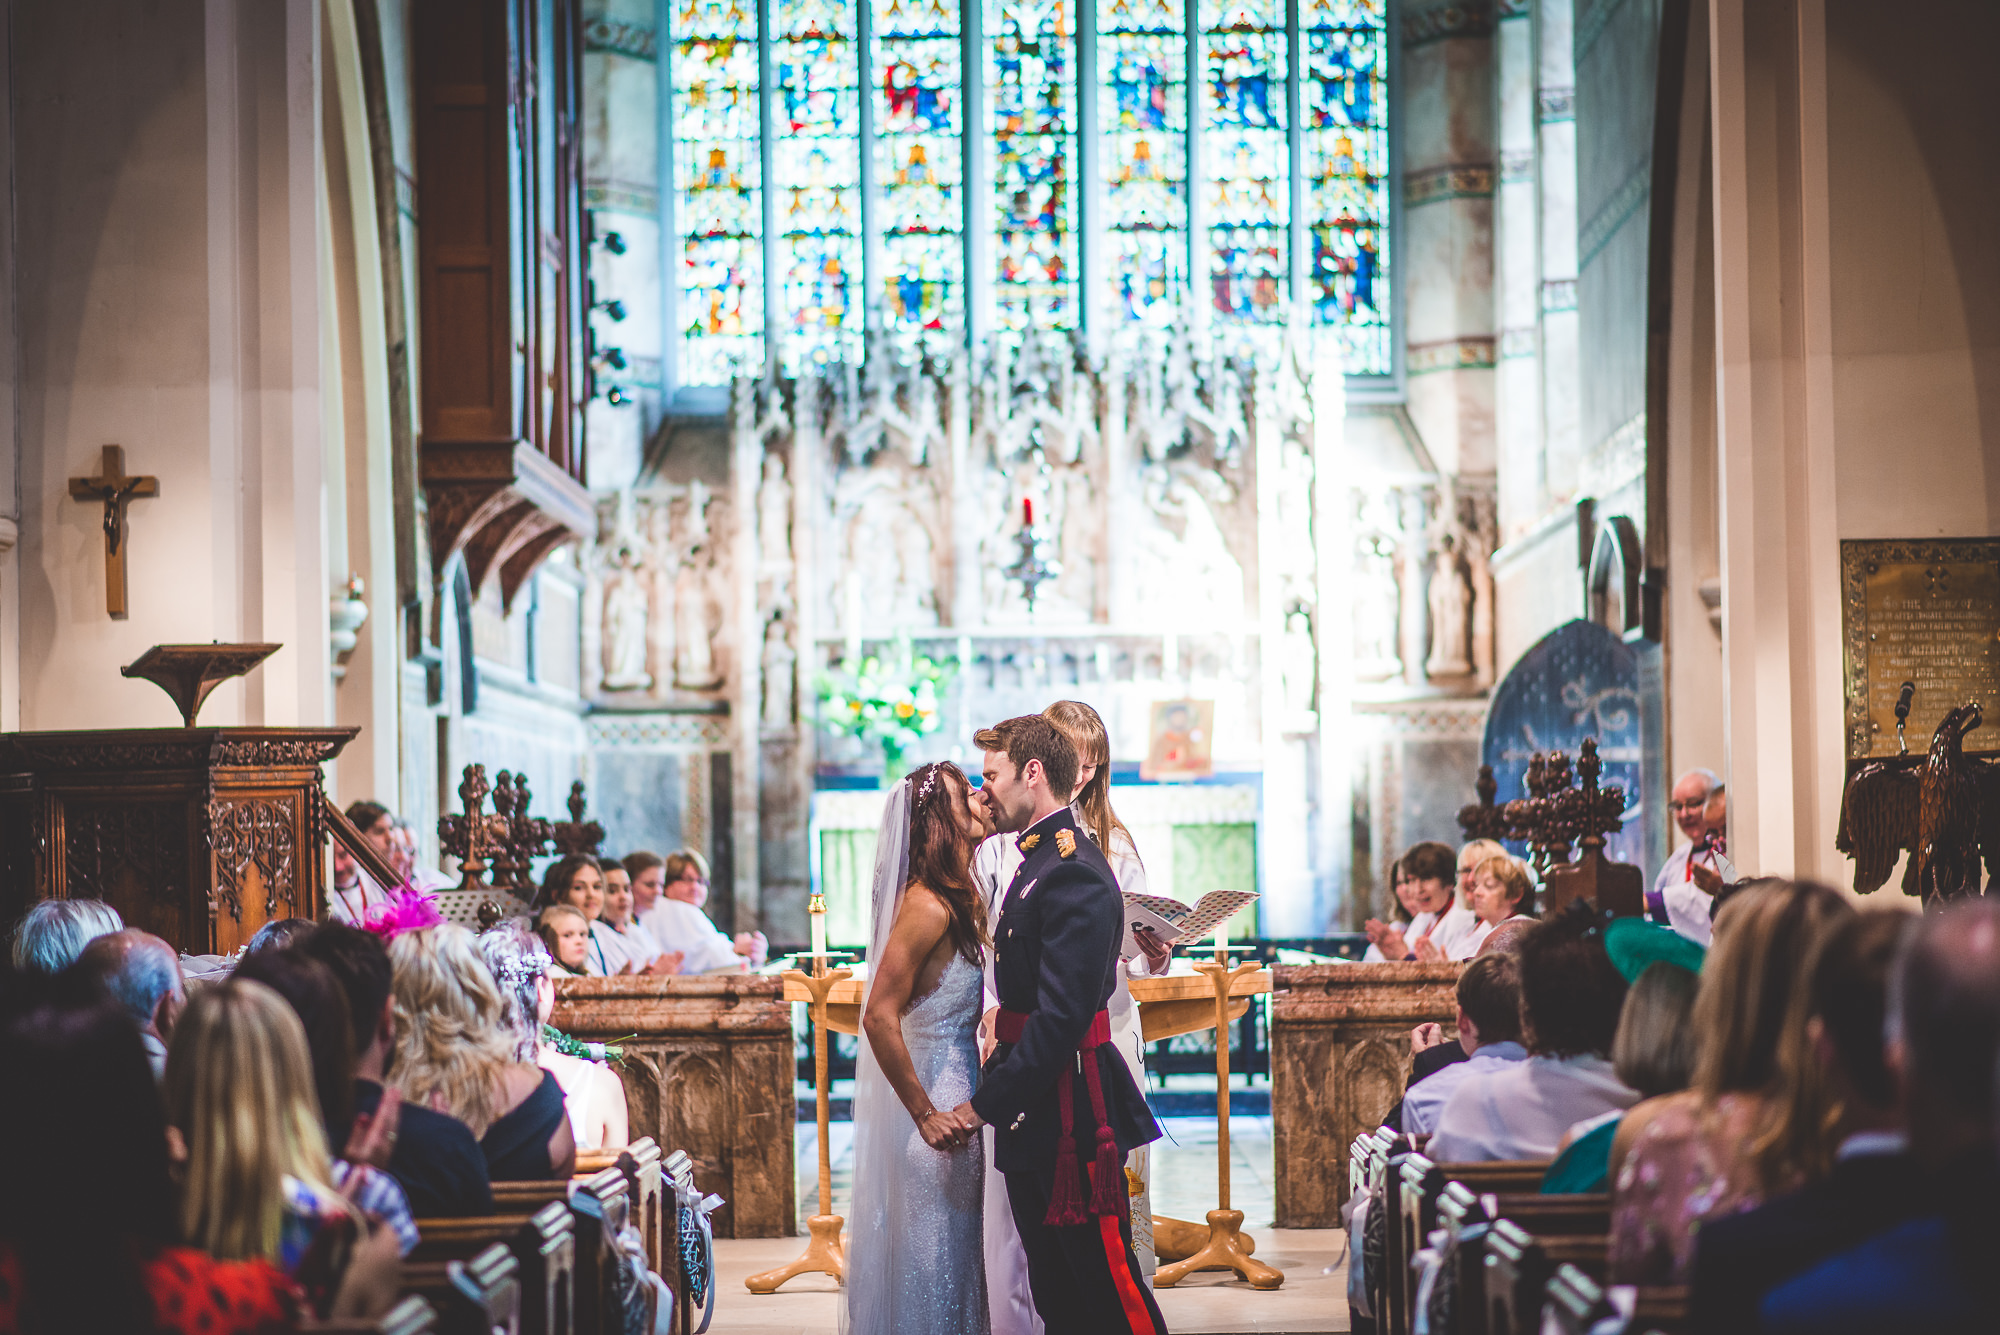 A wedding couple kissing in a church.